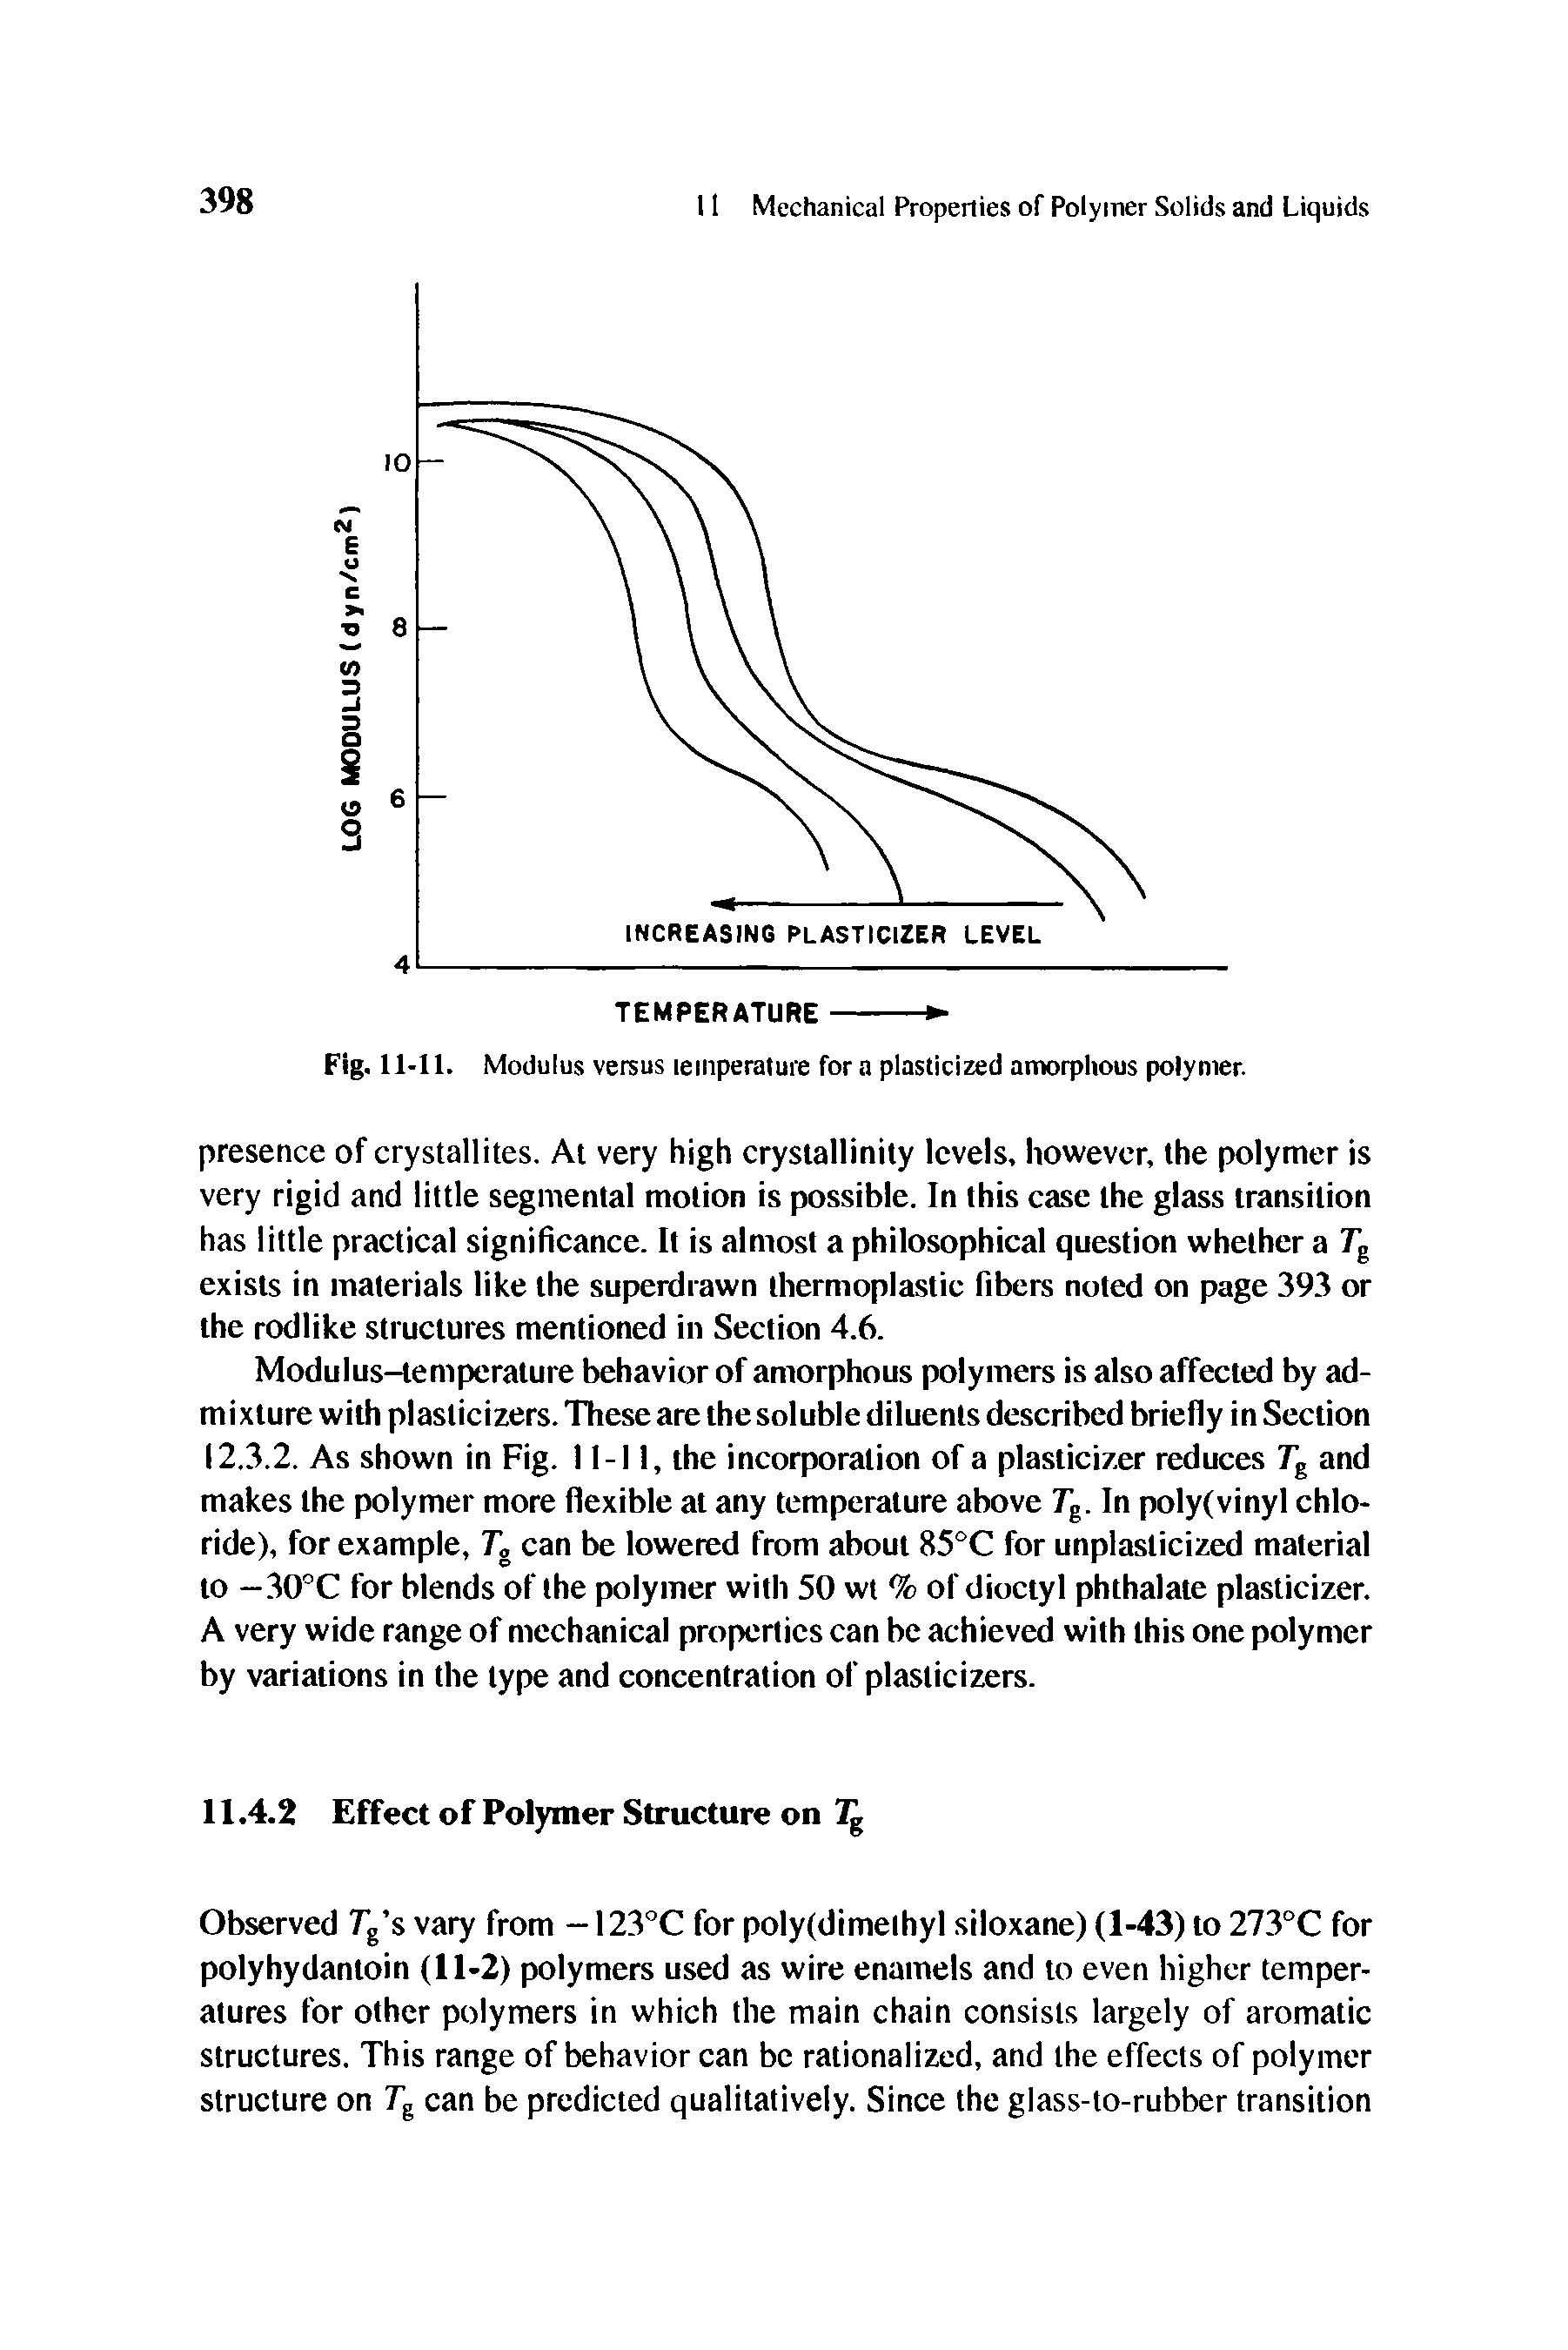 Fig. 11-11. Modulus versus leiiiperatuie for a plasticized amorphous polymer.